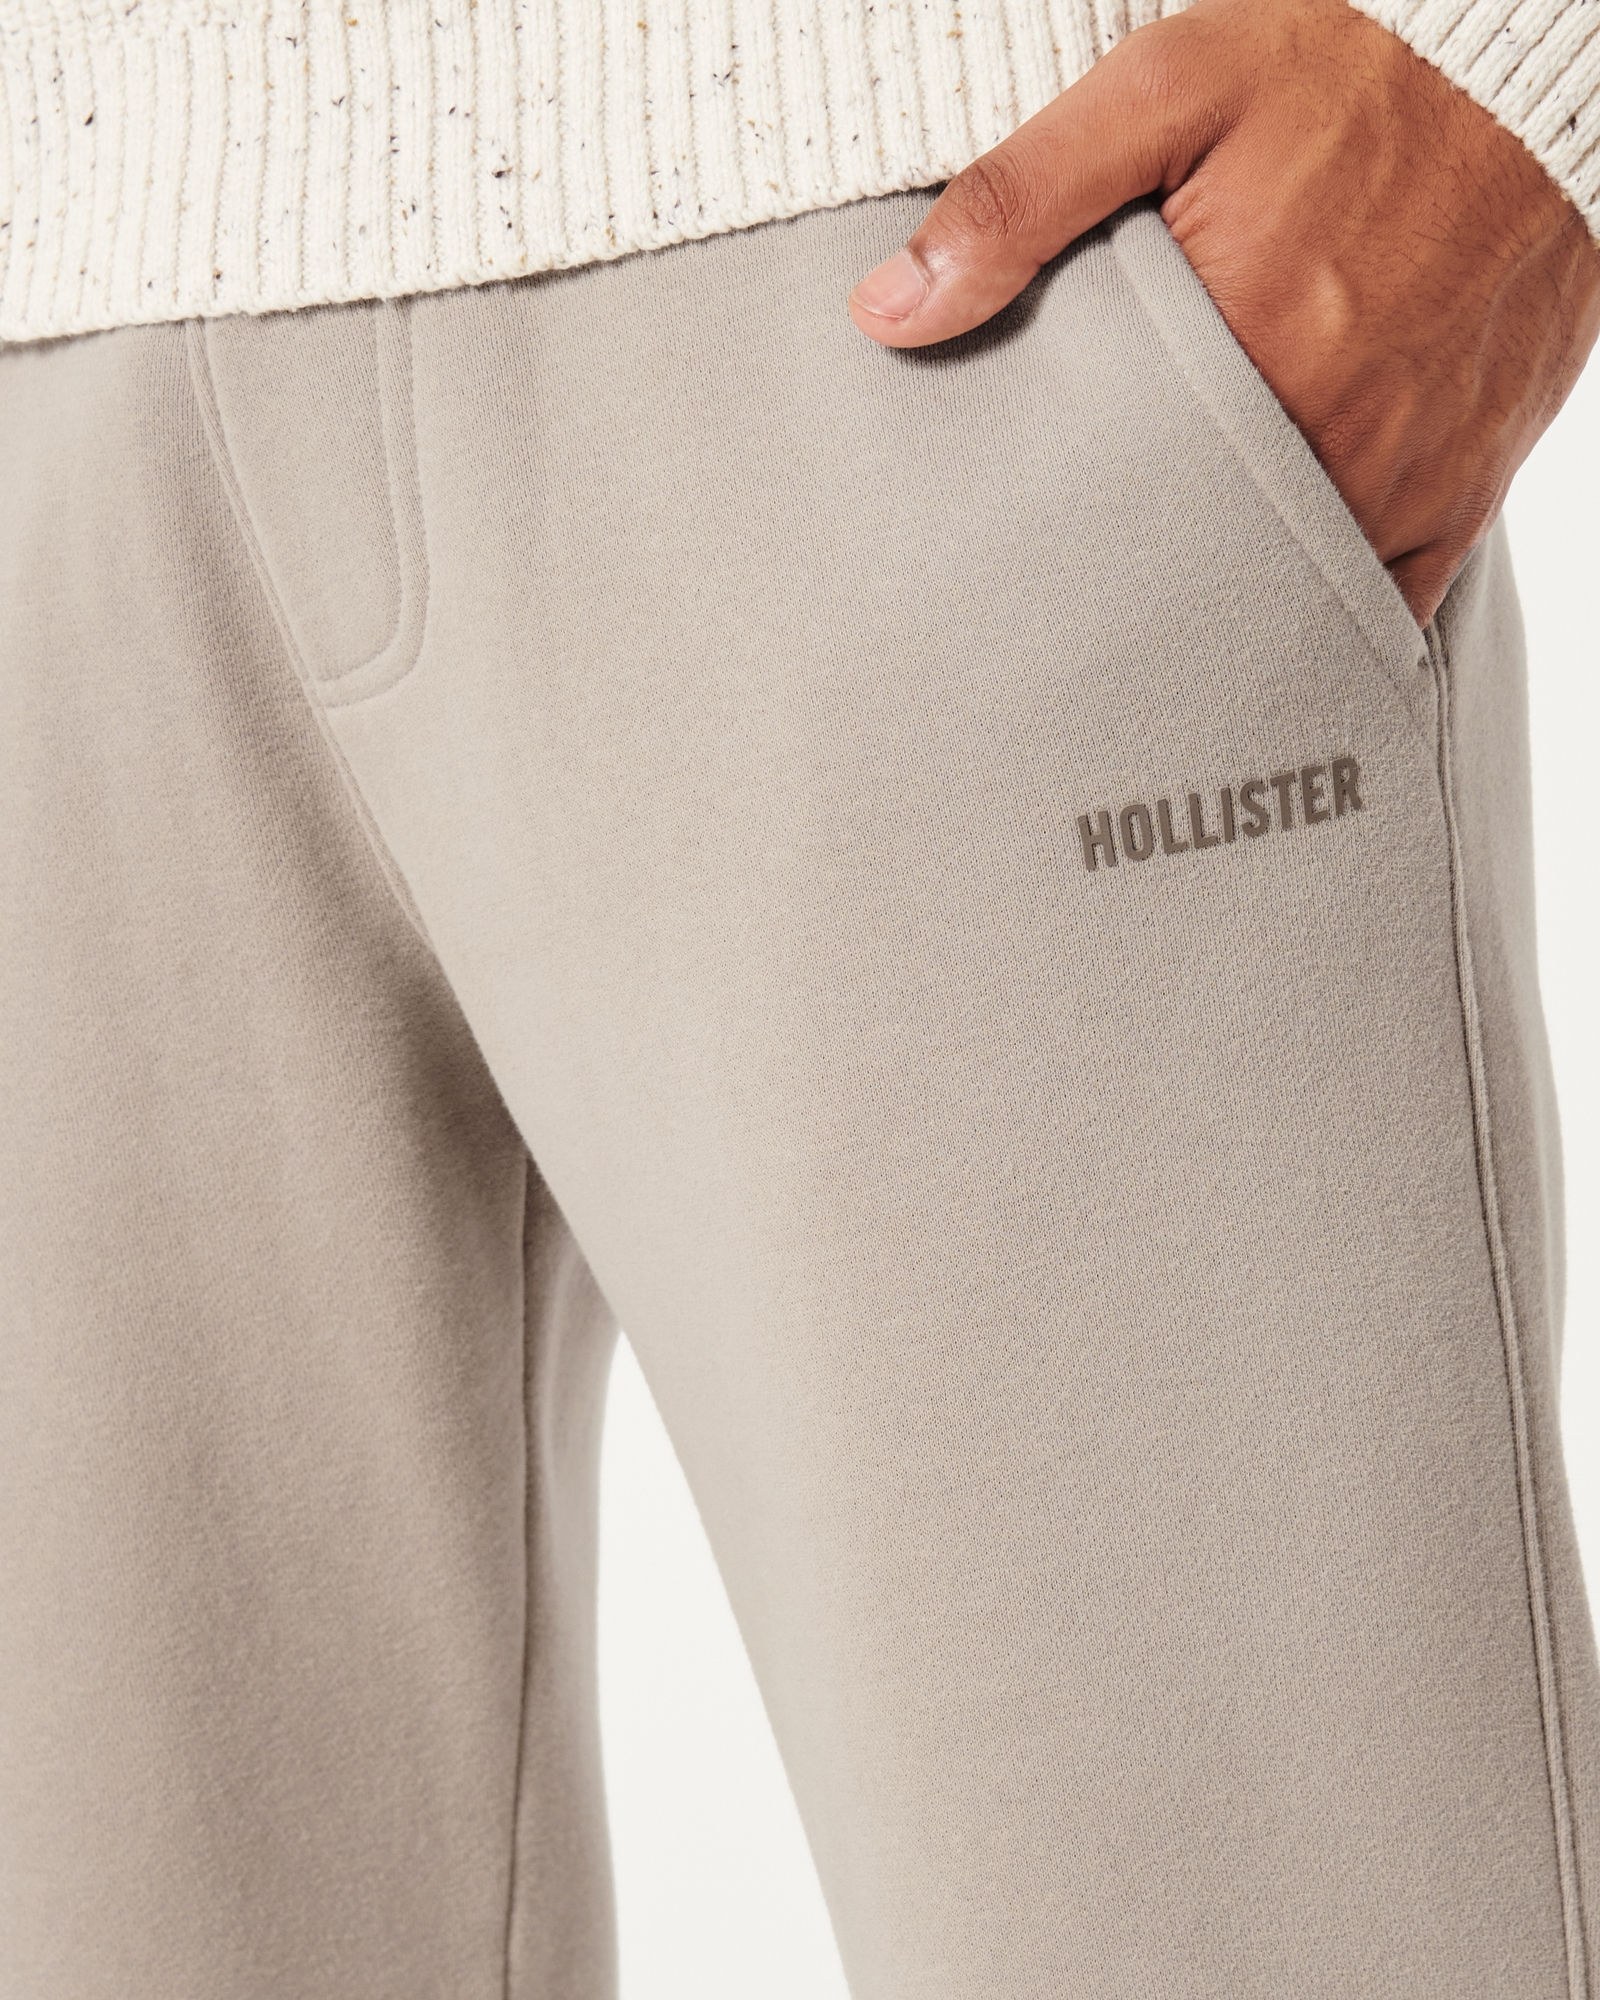 Hollister logo jogger in grey